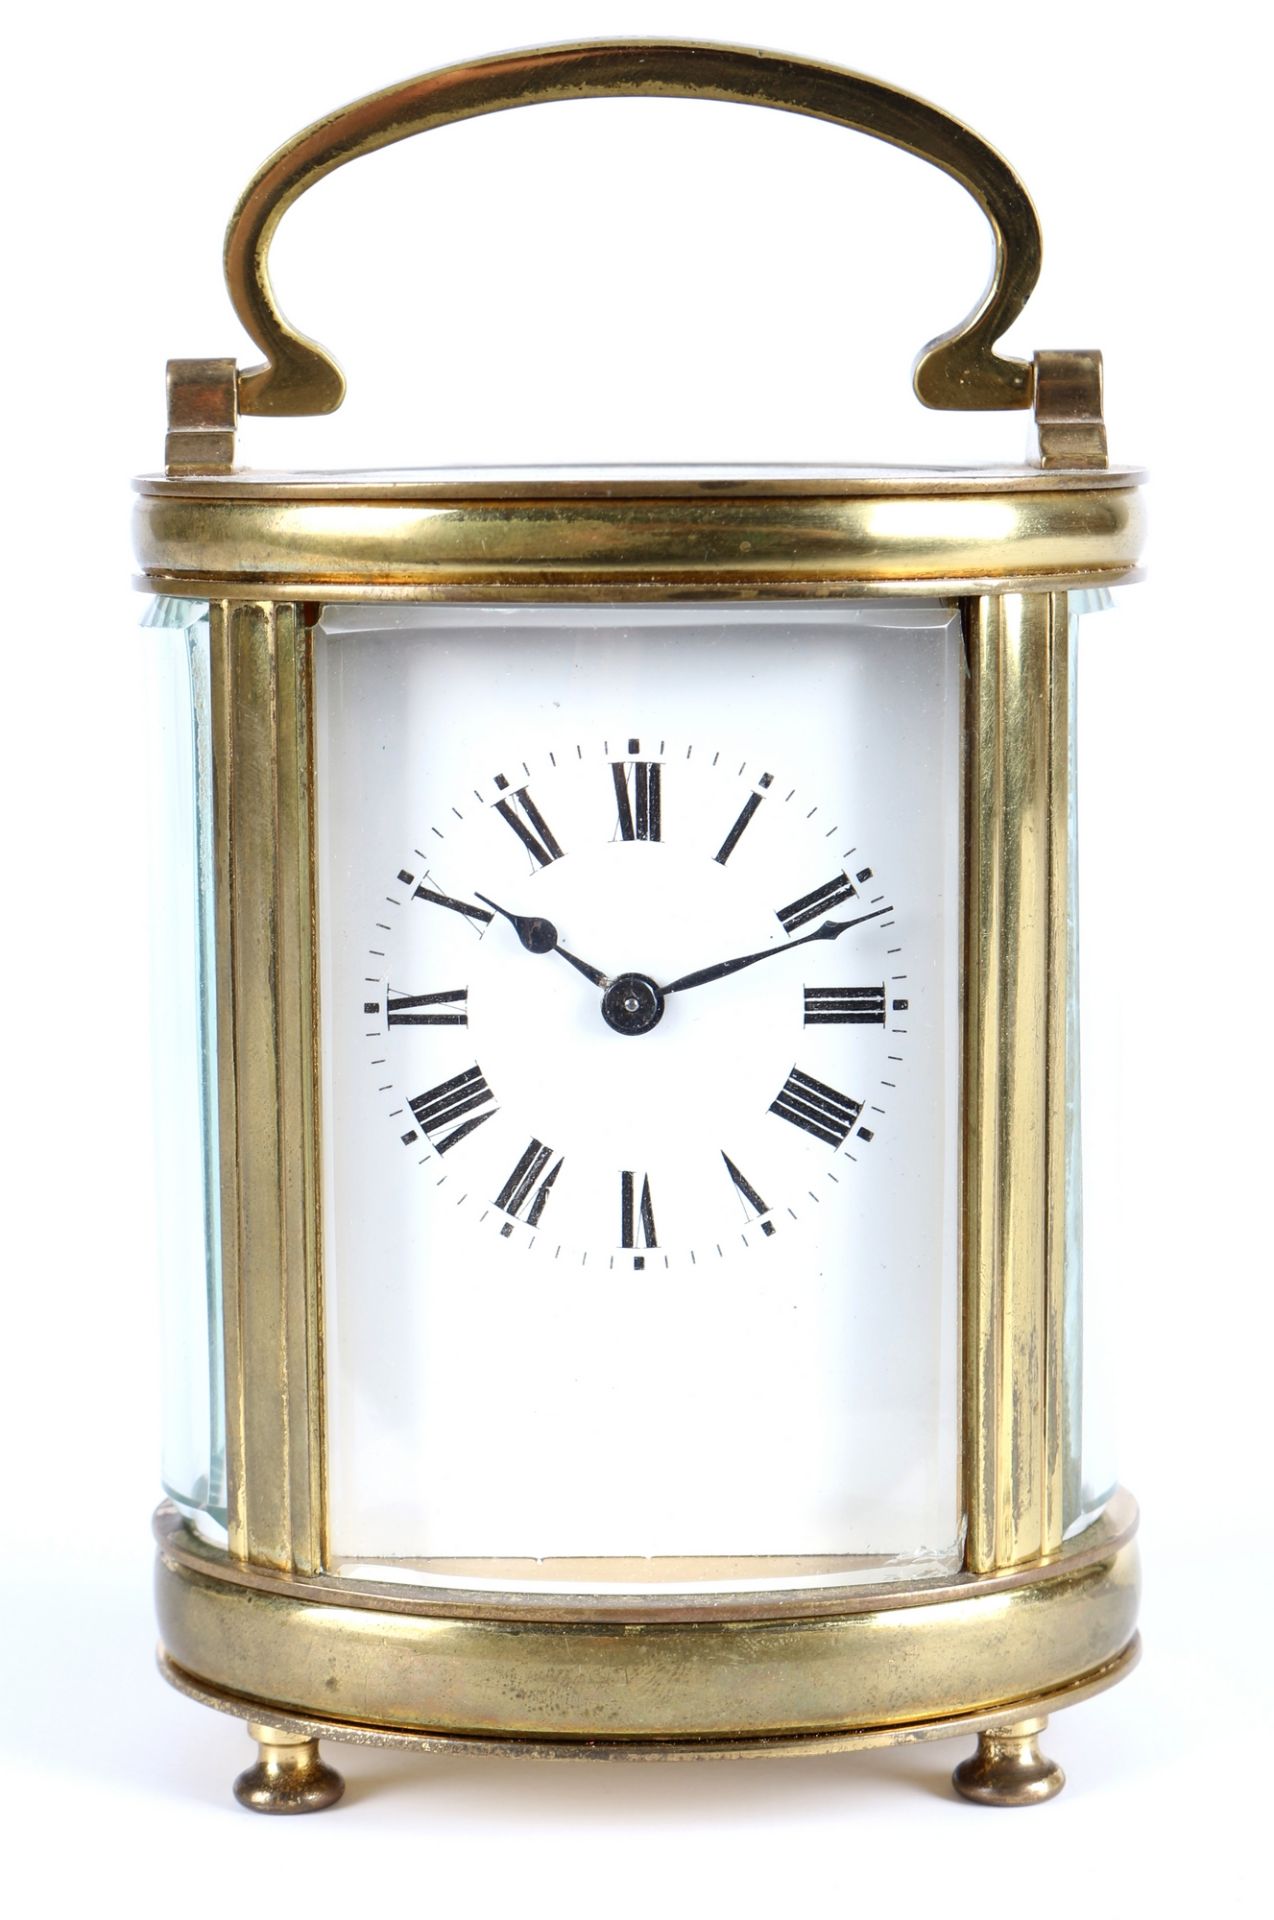 Ovale Reiseuhr, Frankreich um 1900, carriage clock,